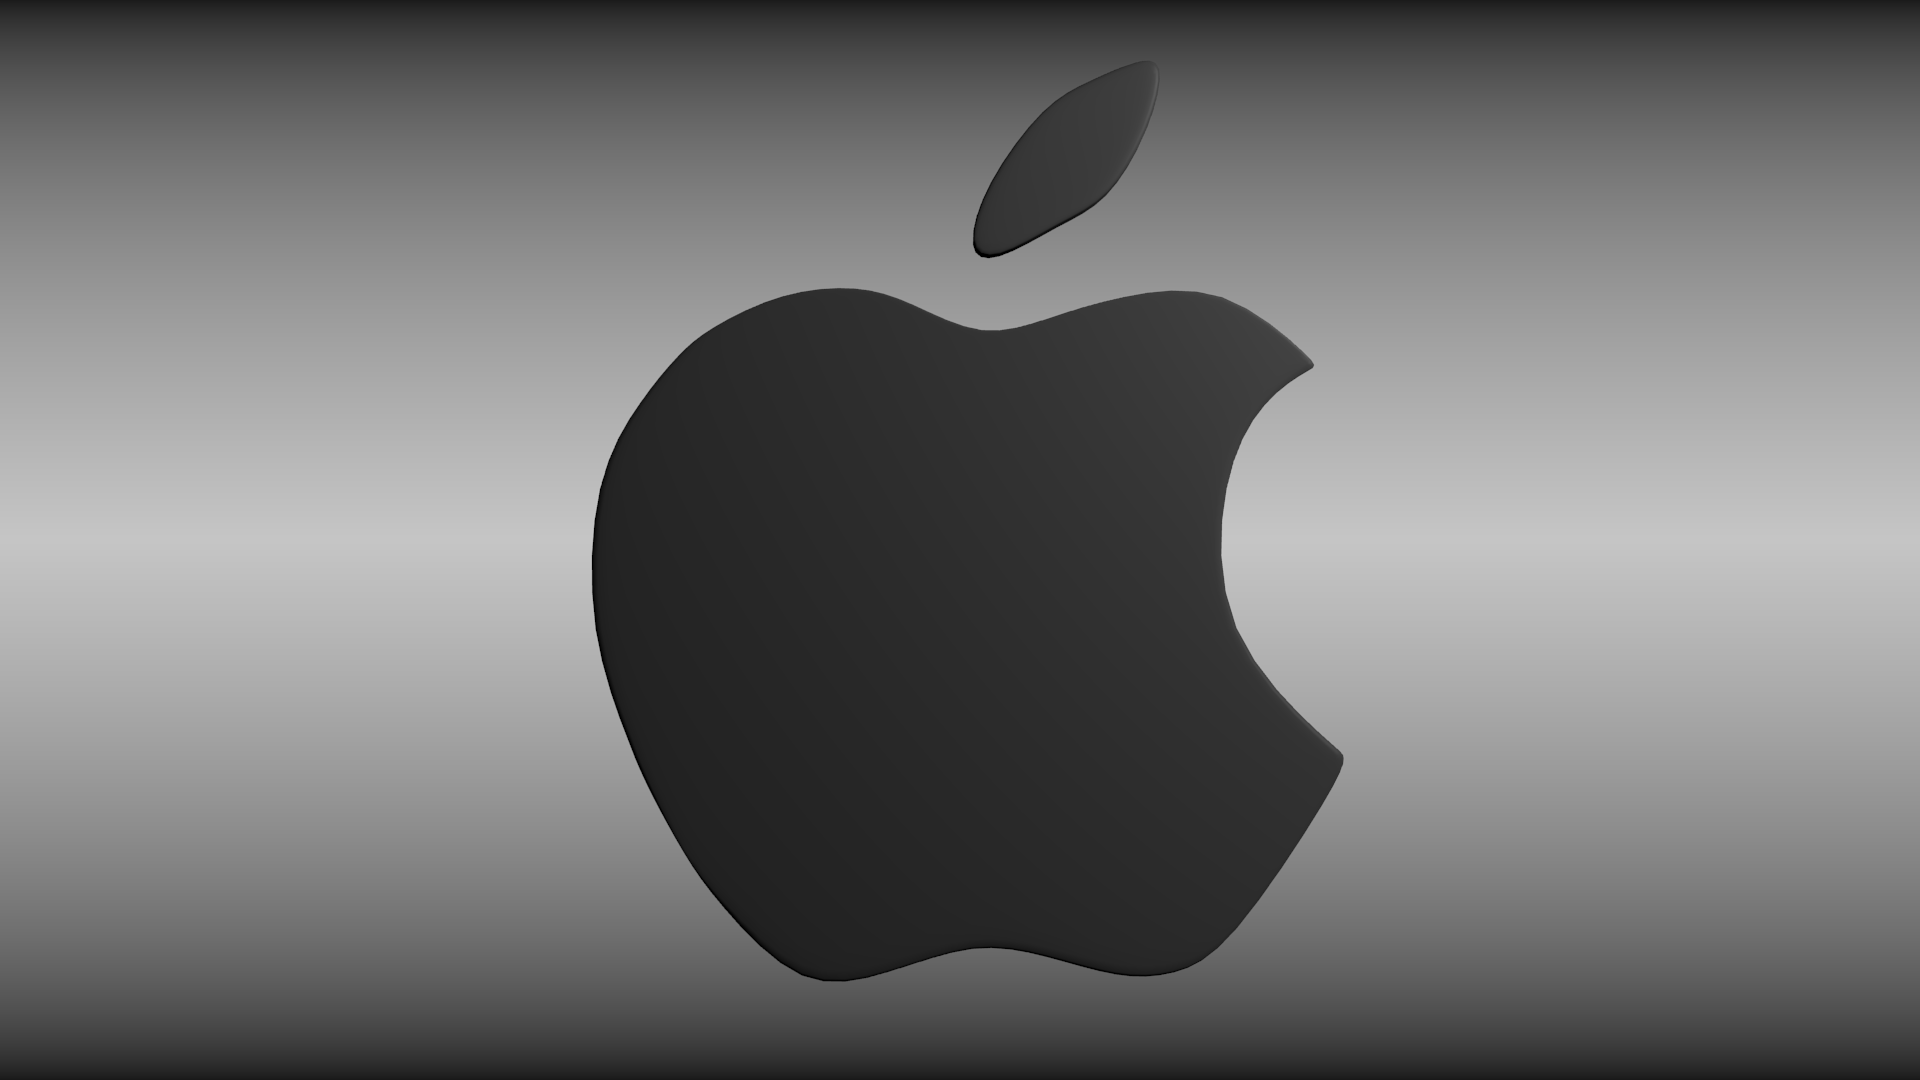 Апл лого. Логотип эпл. Яблоко Эппл. Айфон эпл логотип Эппл. Значок айфона яблоко.